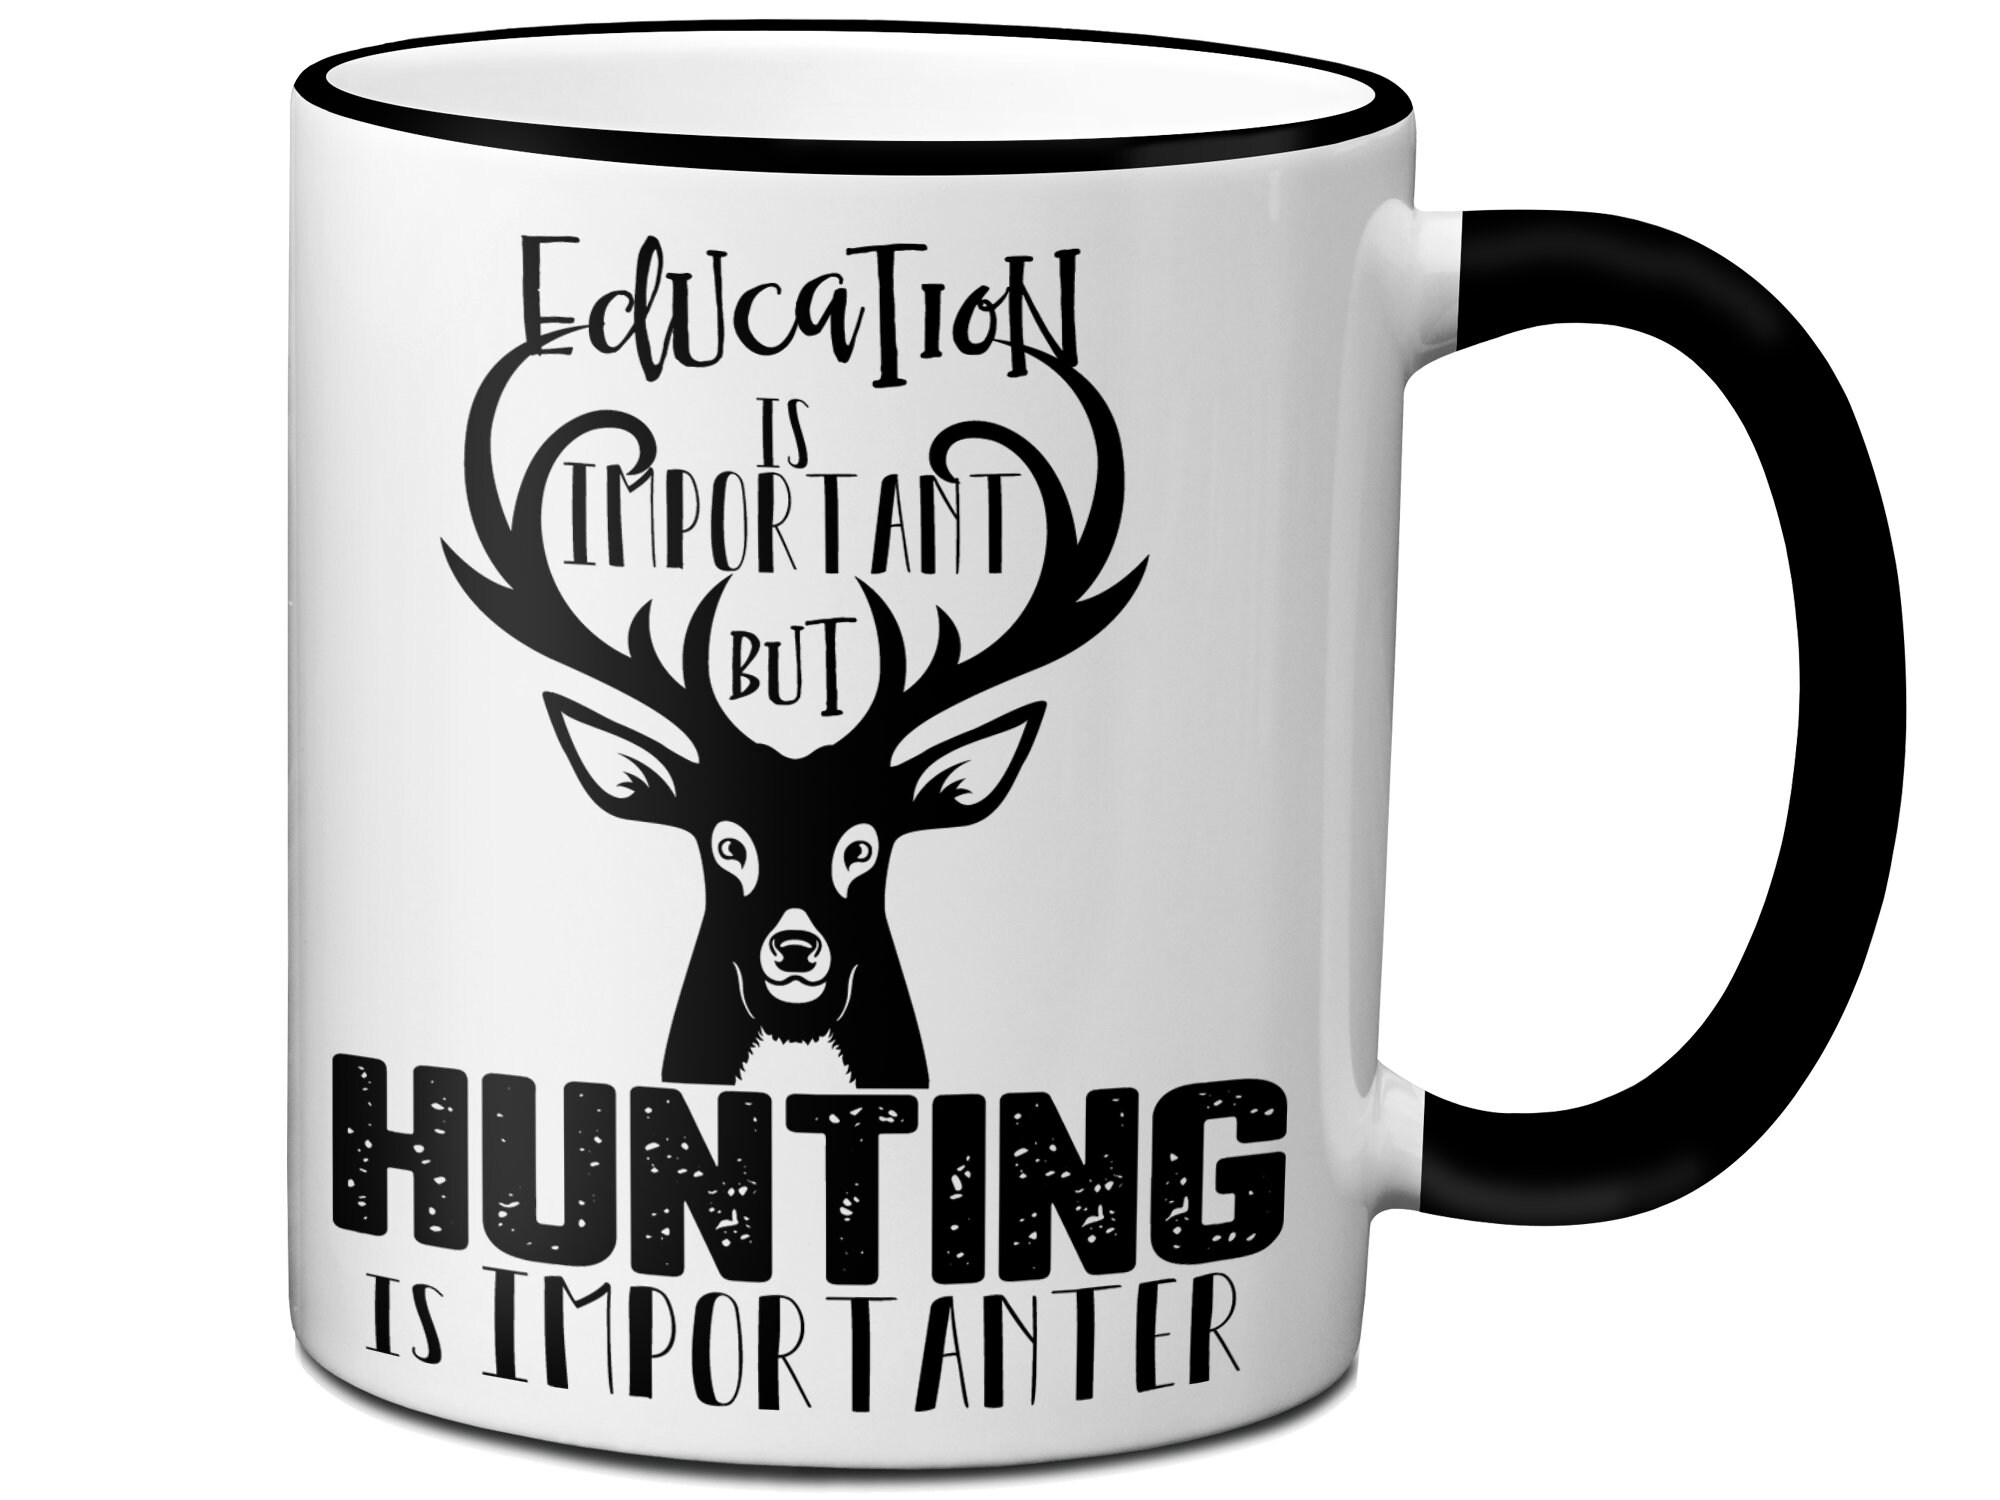 Deer hunter gag gifts